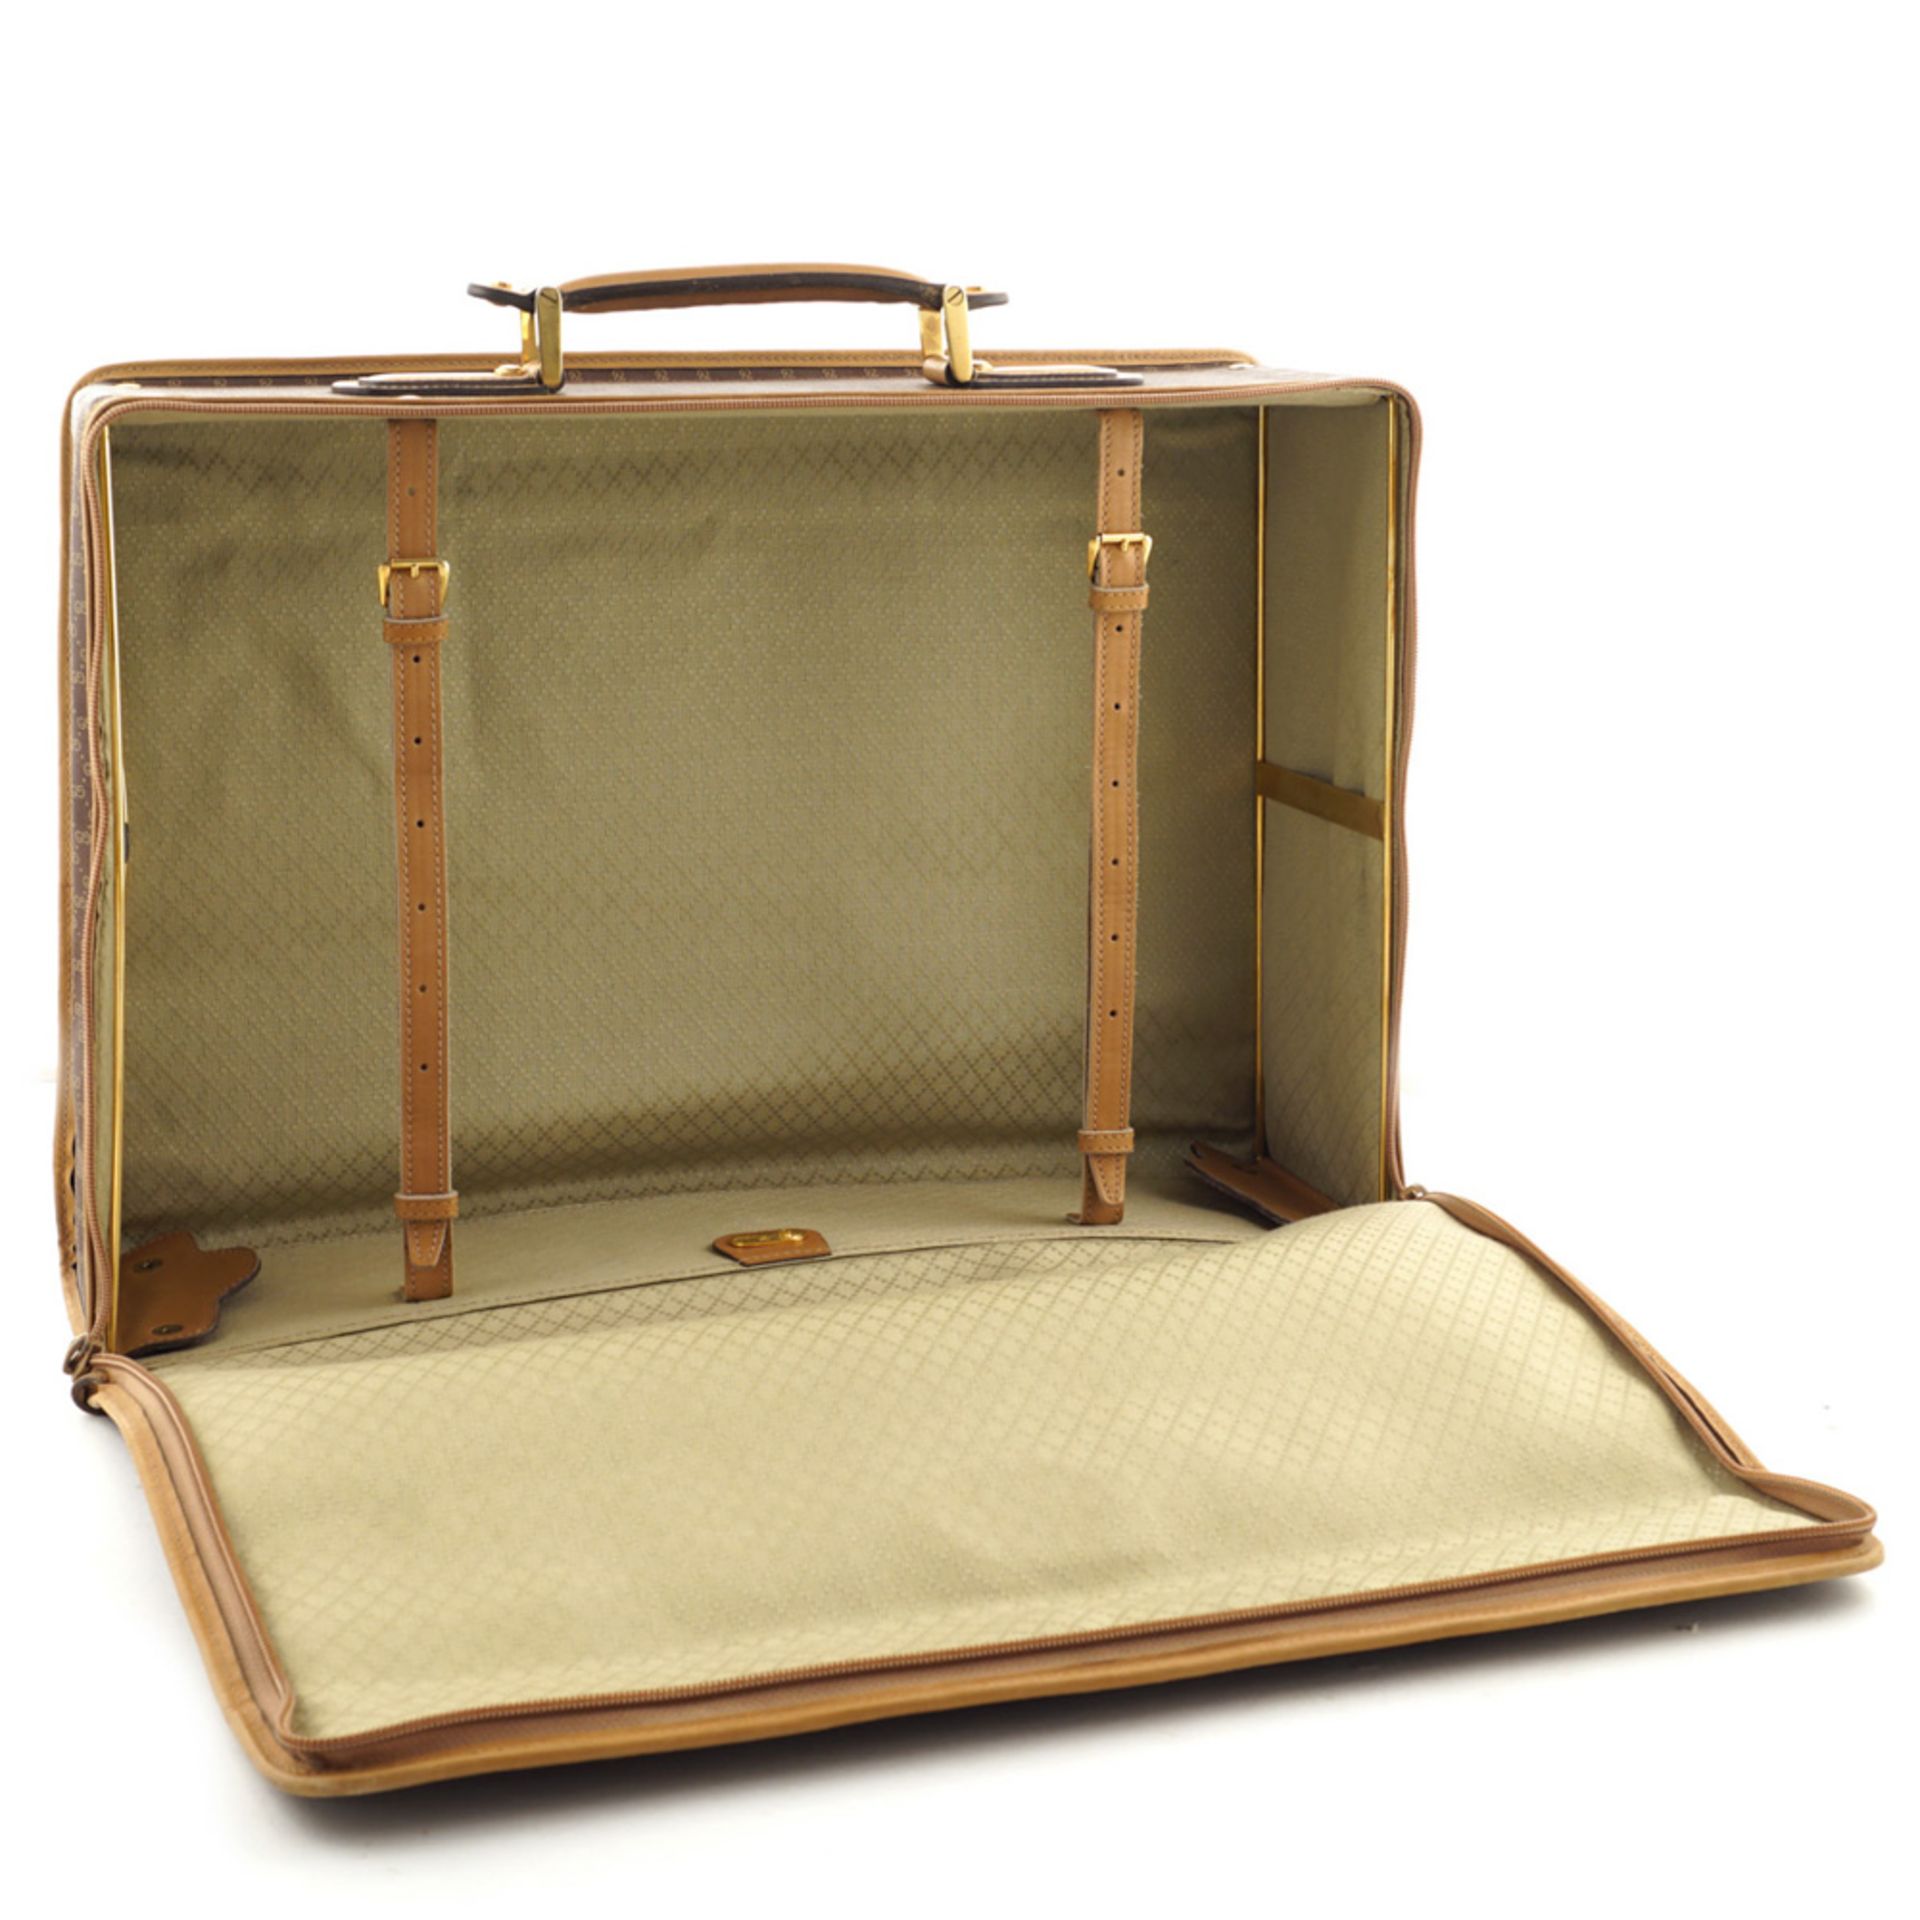 Gucci, vintage cabin suitcase 1970s circa 51,5x37x16,5 cm - Image 3 of 4